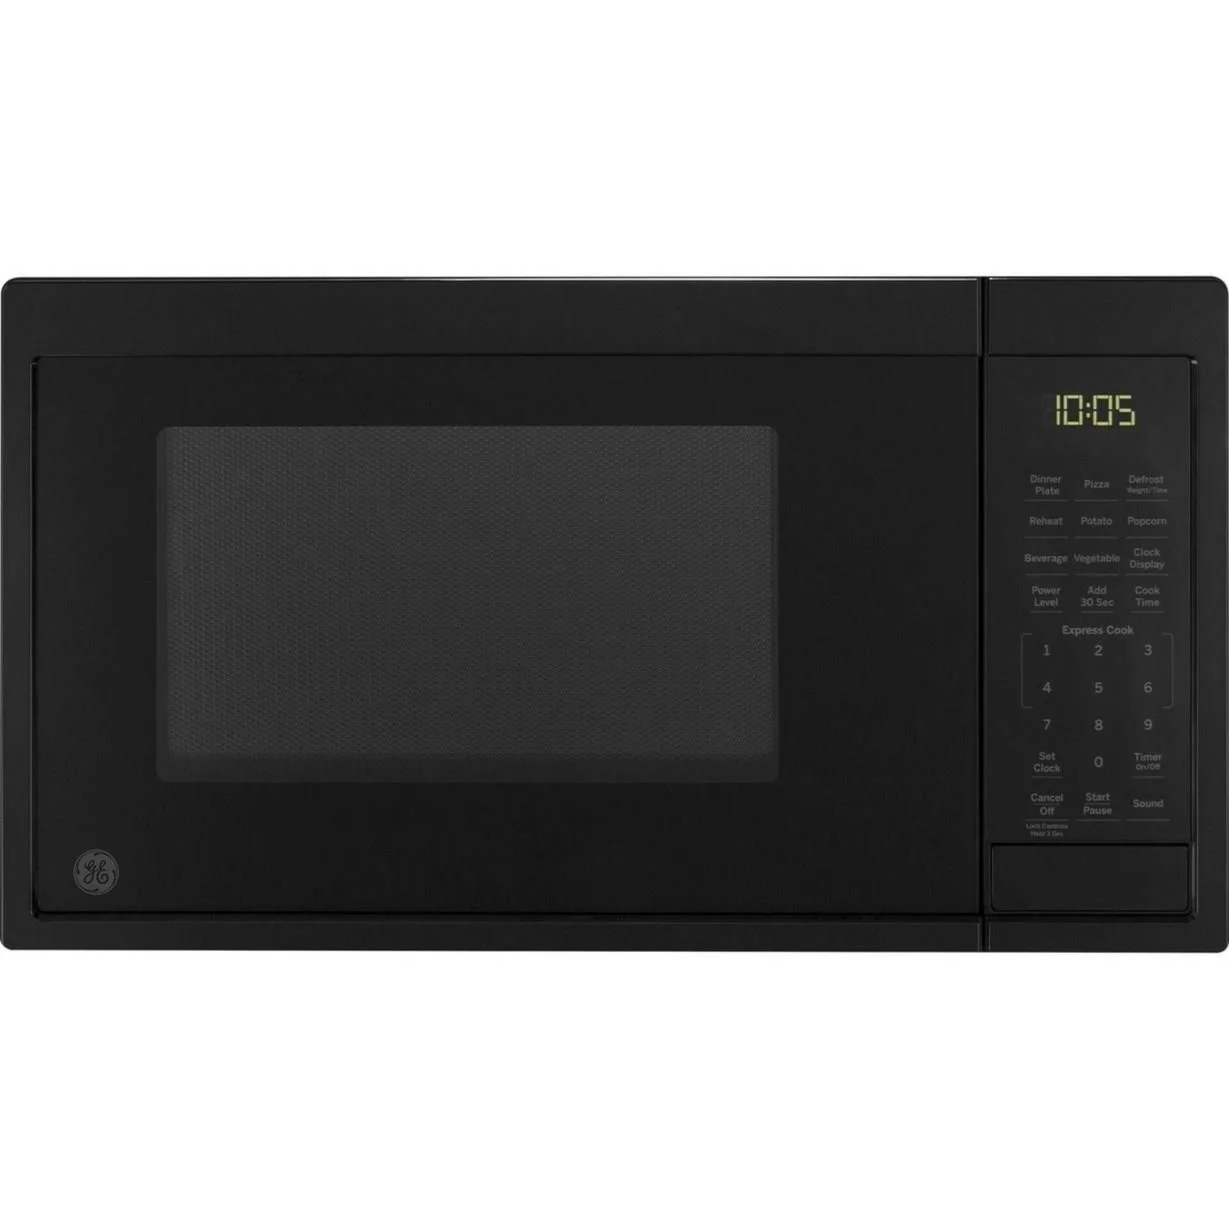 GE GE 1.1 Cu. Ft. Capacity Countertop Microwave Oven - Home Appliance  Liquidator